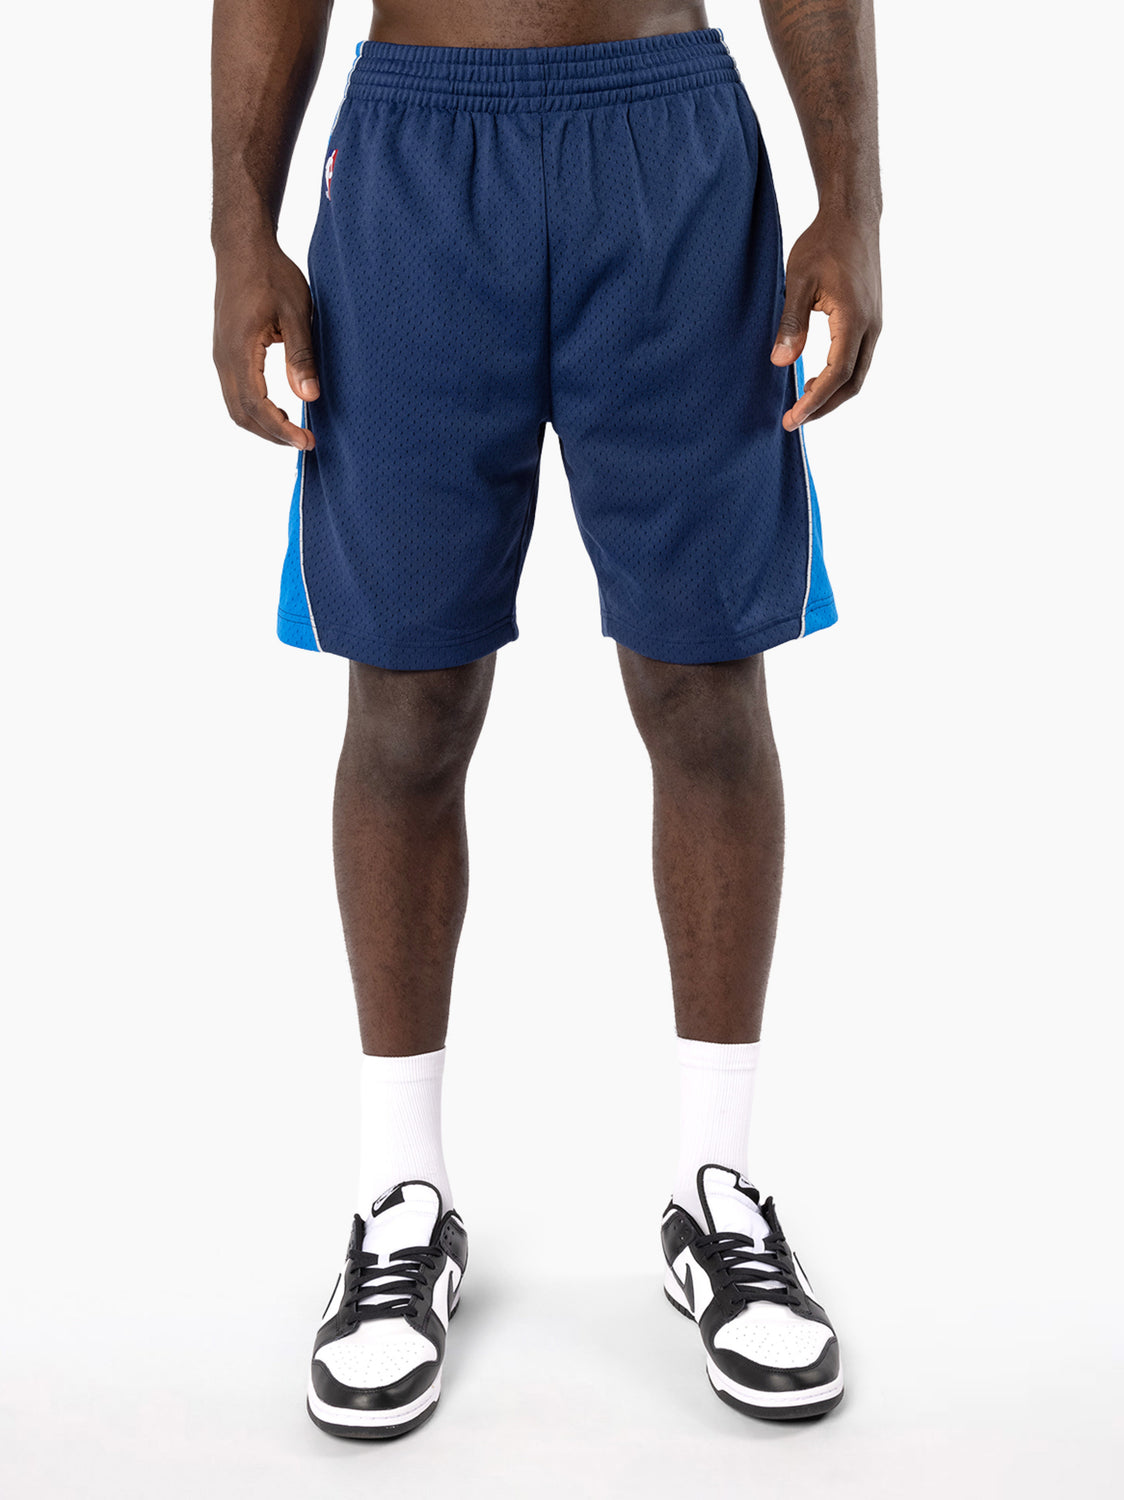 Dallas Mavericks Jerseys & Teamwear, NBA Merchandise